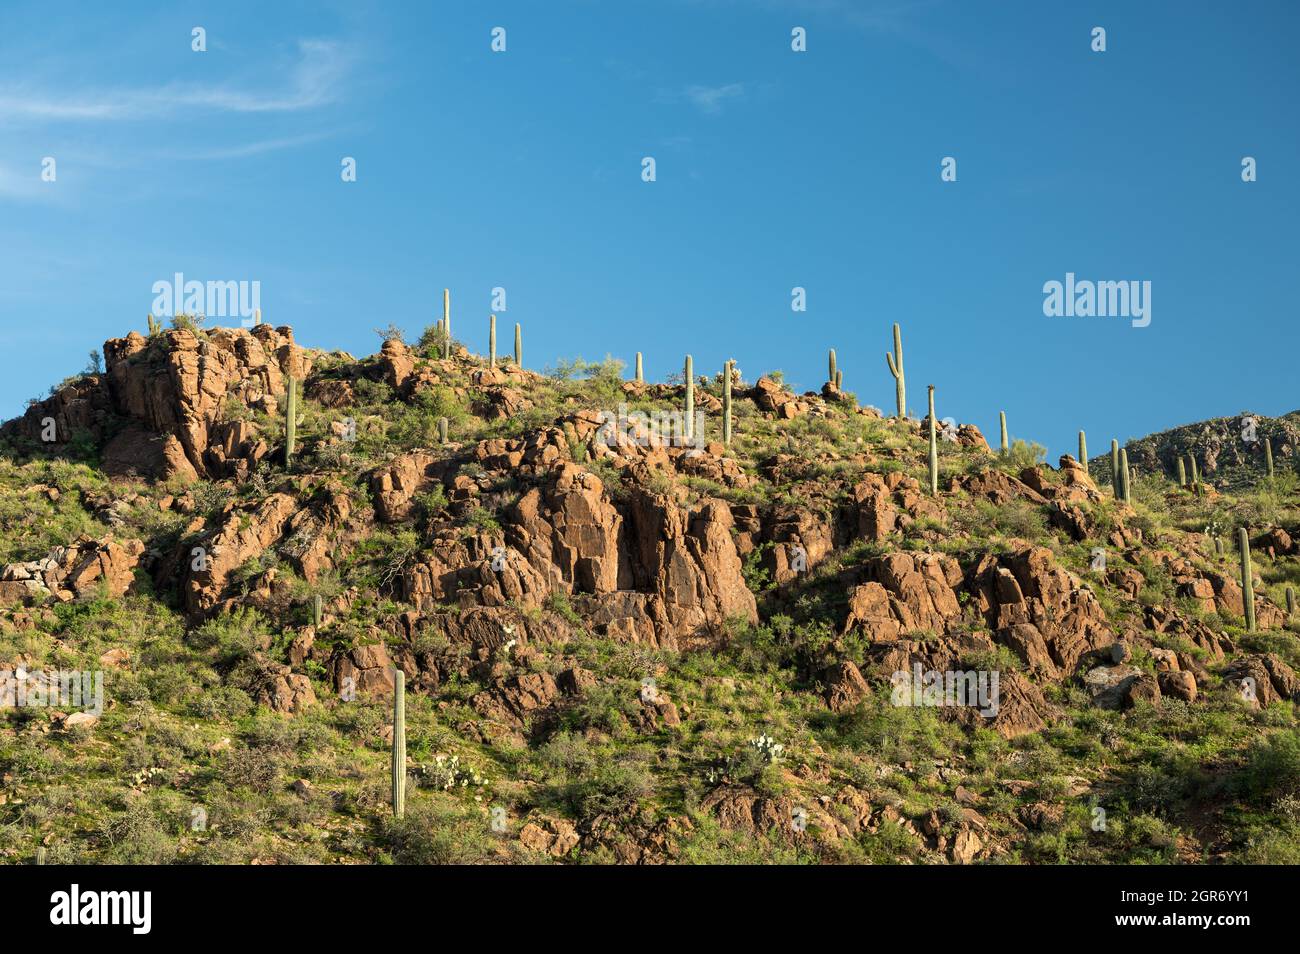 Saguaro Cactus on hill in Sonoran desert landscape Stock Photo